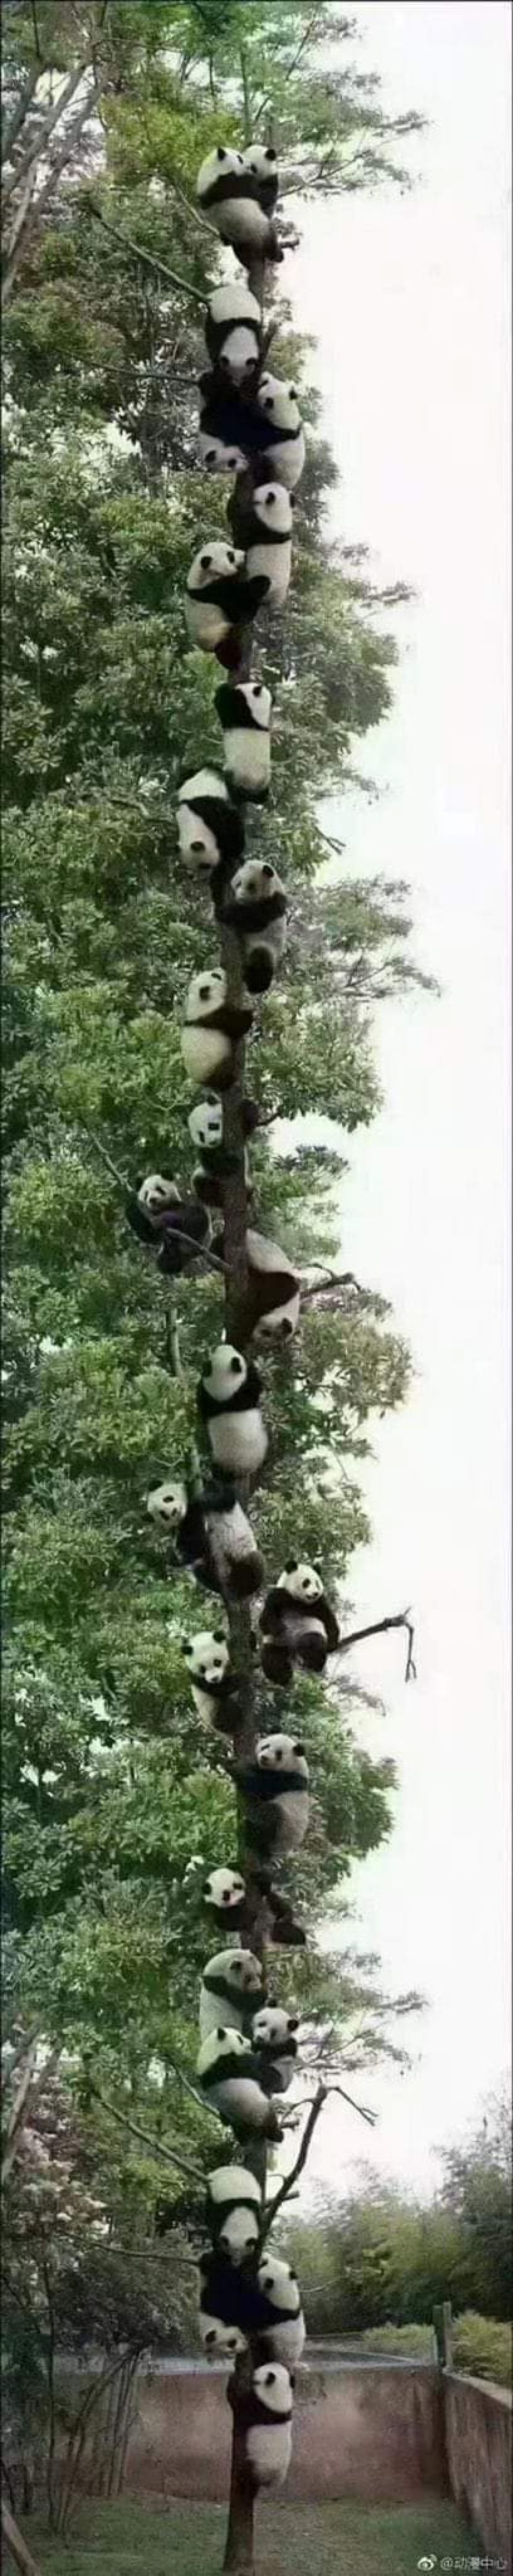 Gempa di Ya'an, 27 Panda Panjat 1 Pohon-Image-2